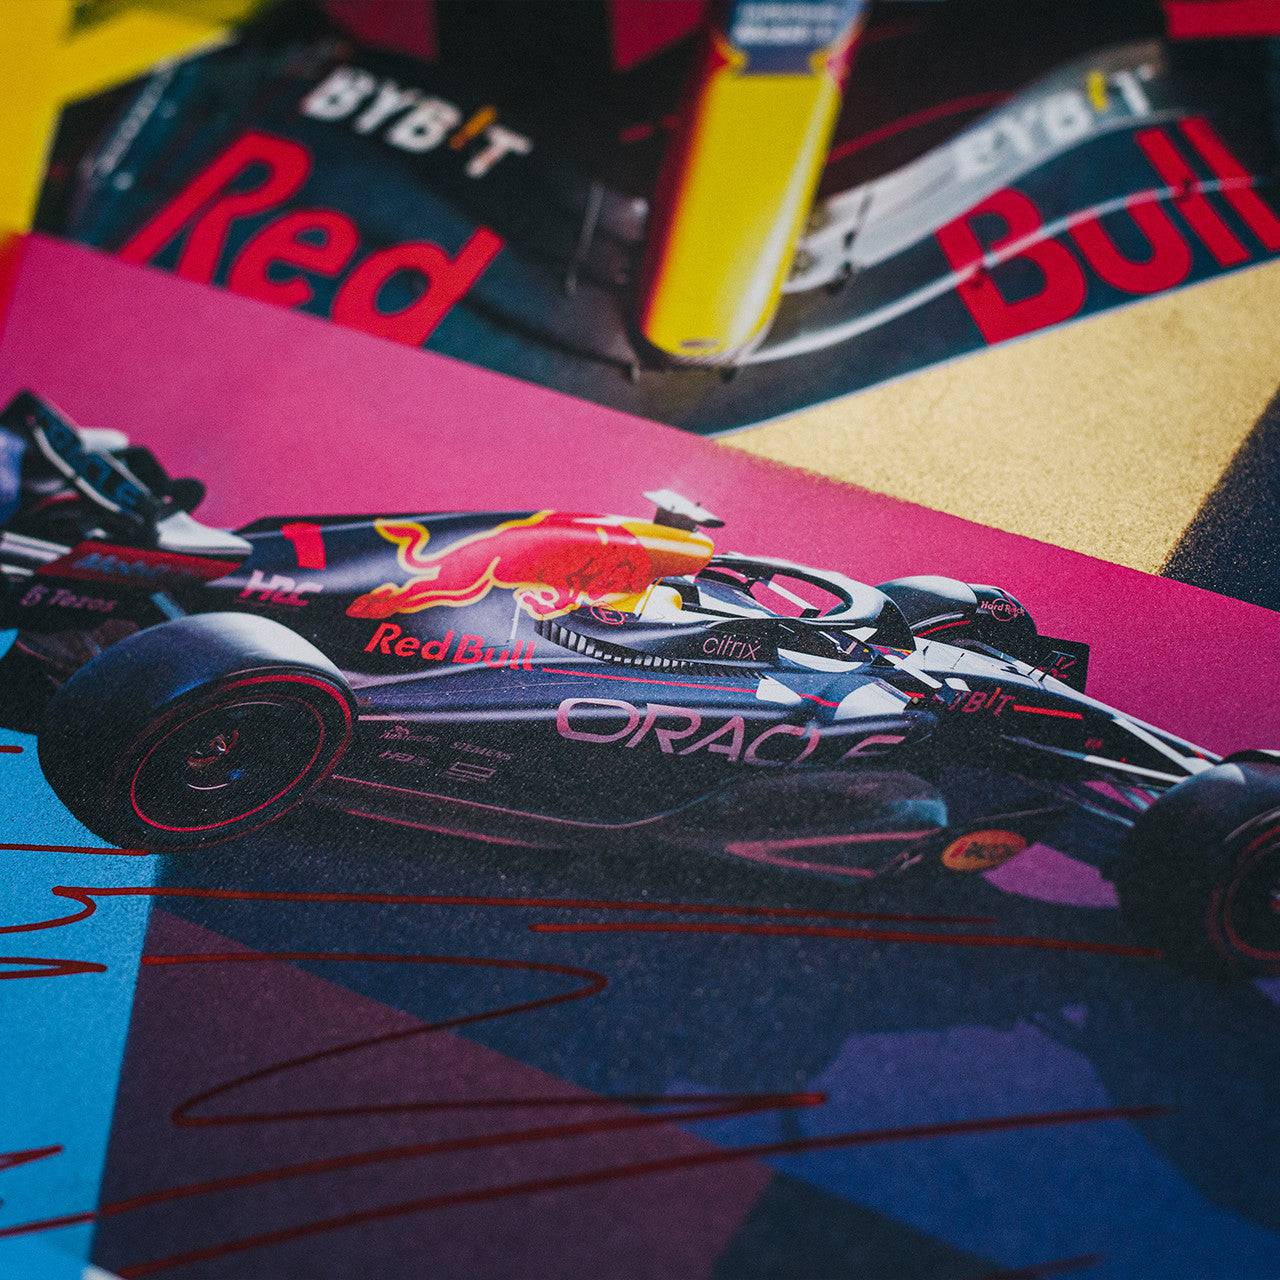 F1 Max Verstappen Vs Lewis Hamilton Honda Red Bull Vs Mercedes AMG Print  Formula 1 Poster -  Israel